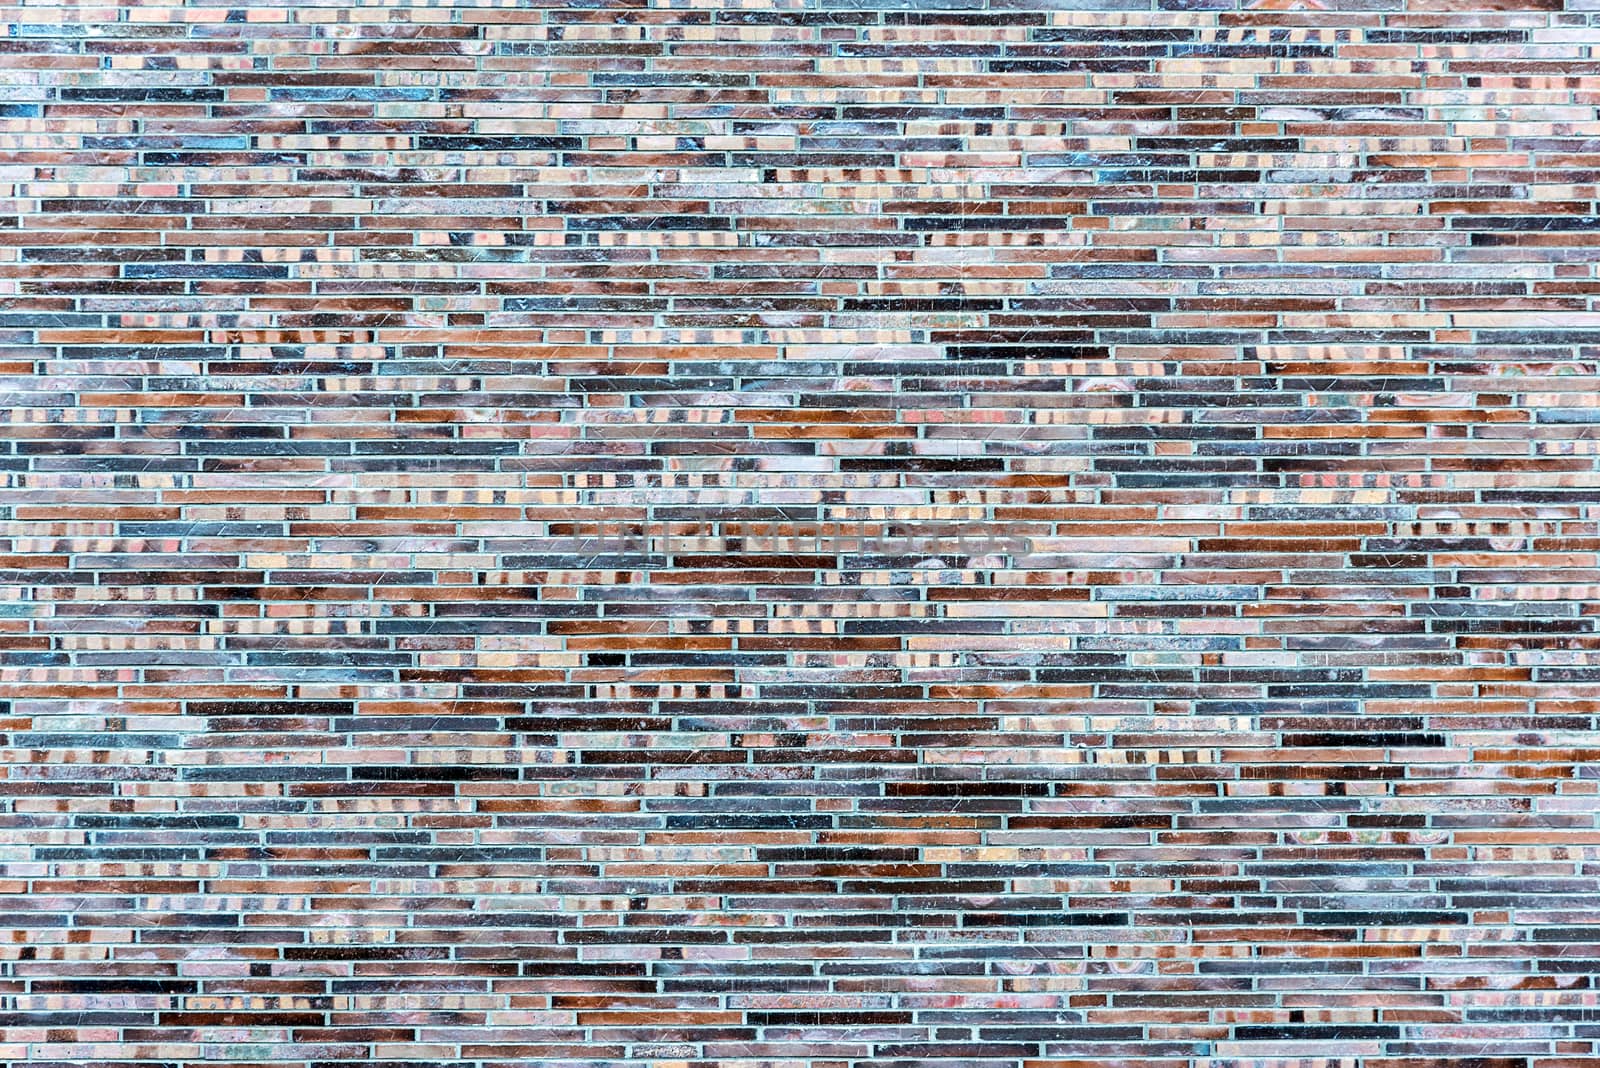 Wall made of small clinker bricks by elxeneize